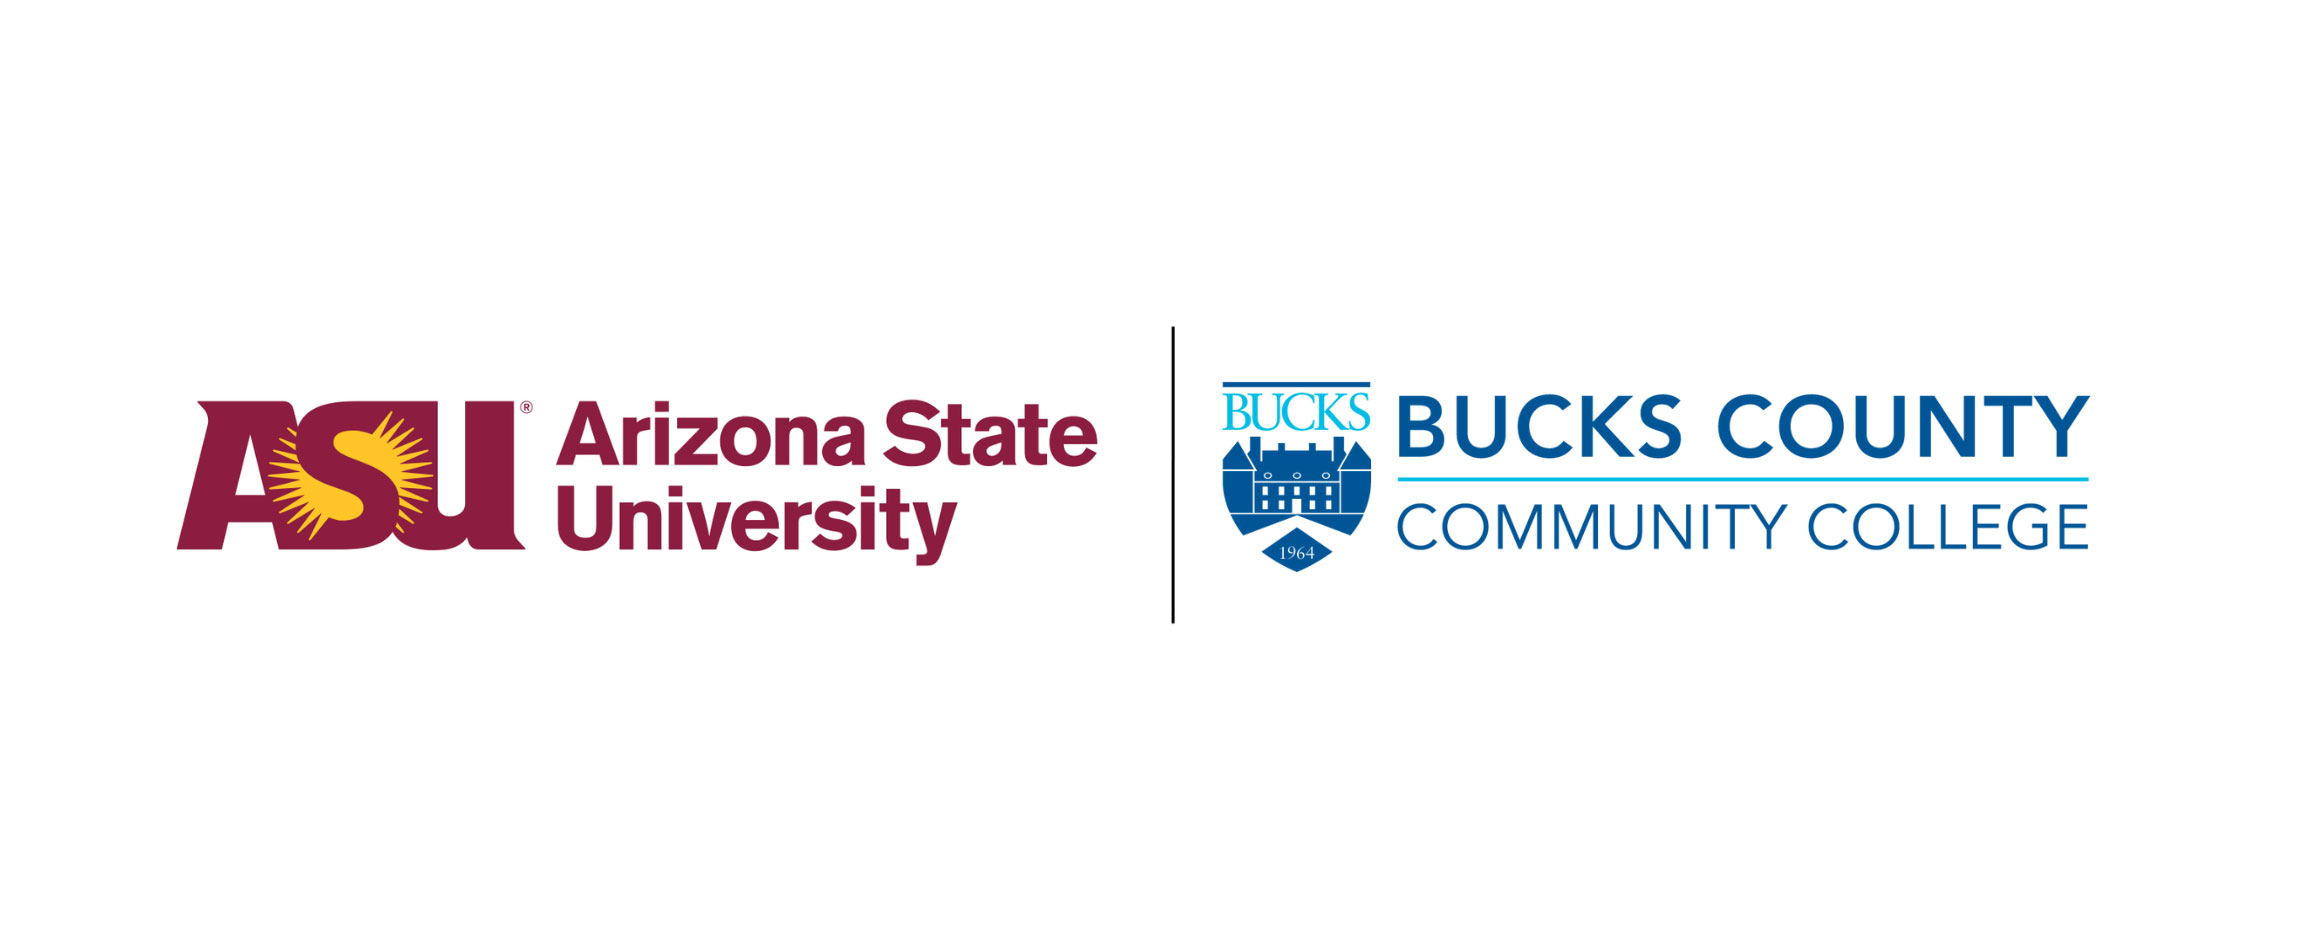 Arizona State University and Bucks County Community College